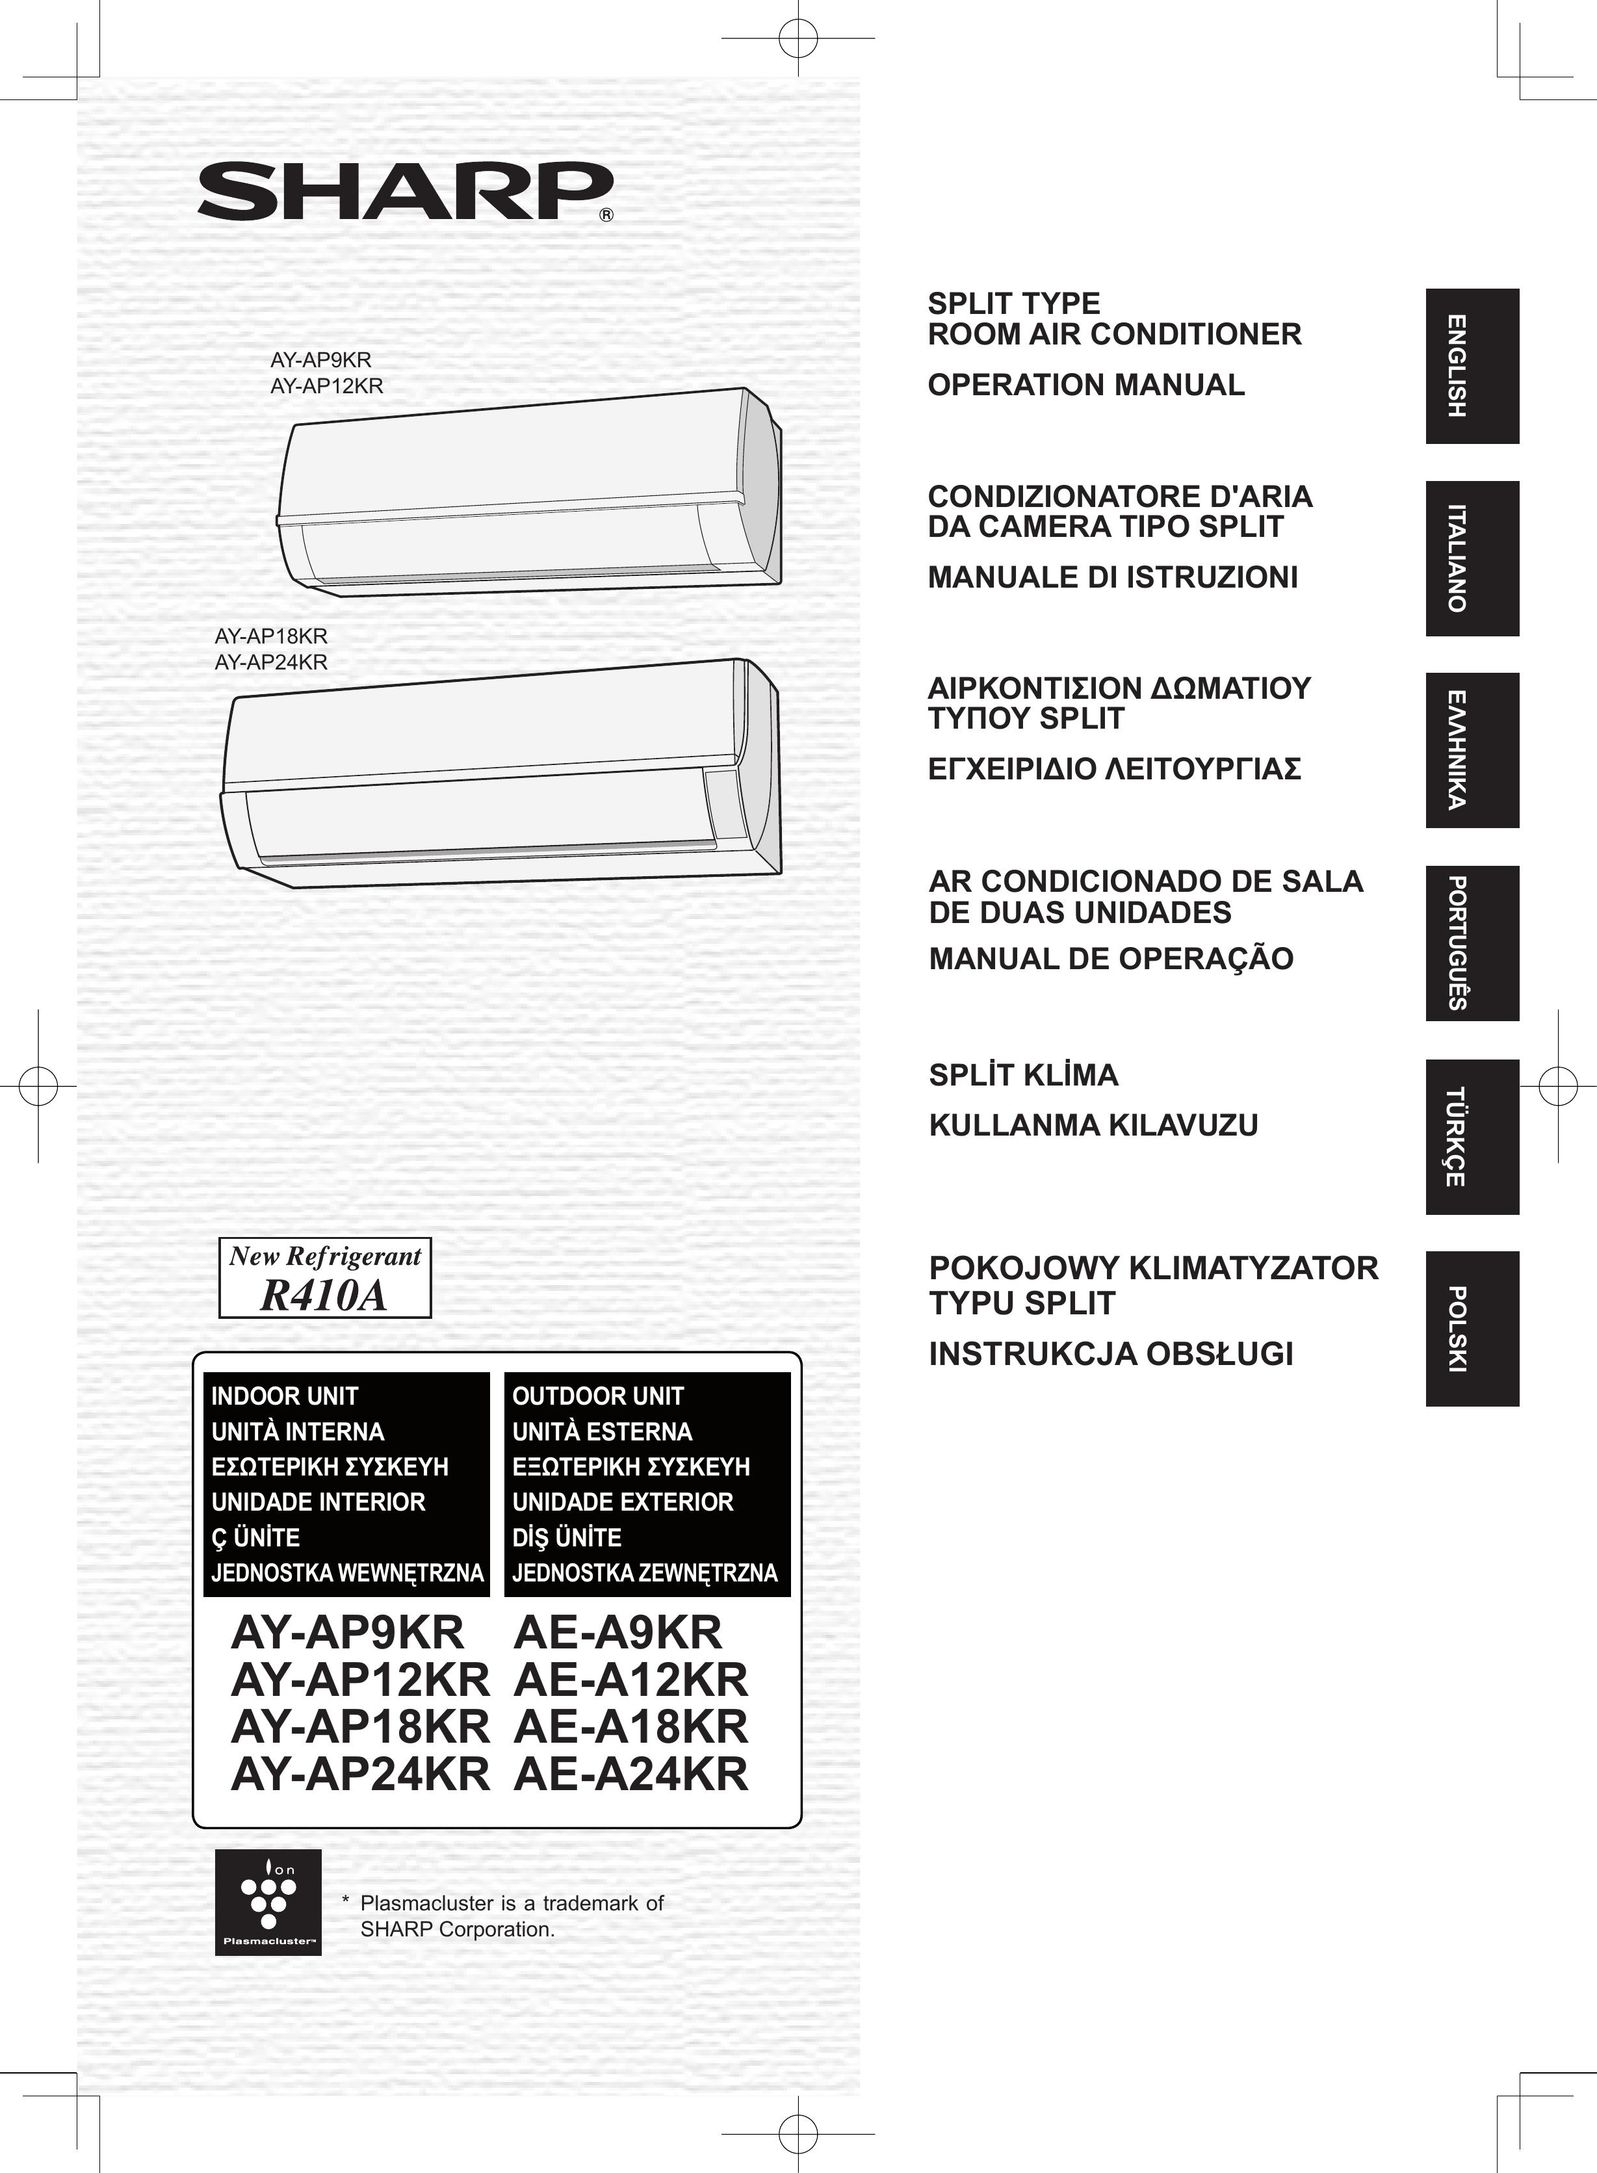 Sharp AE-A12KR Air Conditioner User Manual